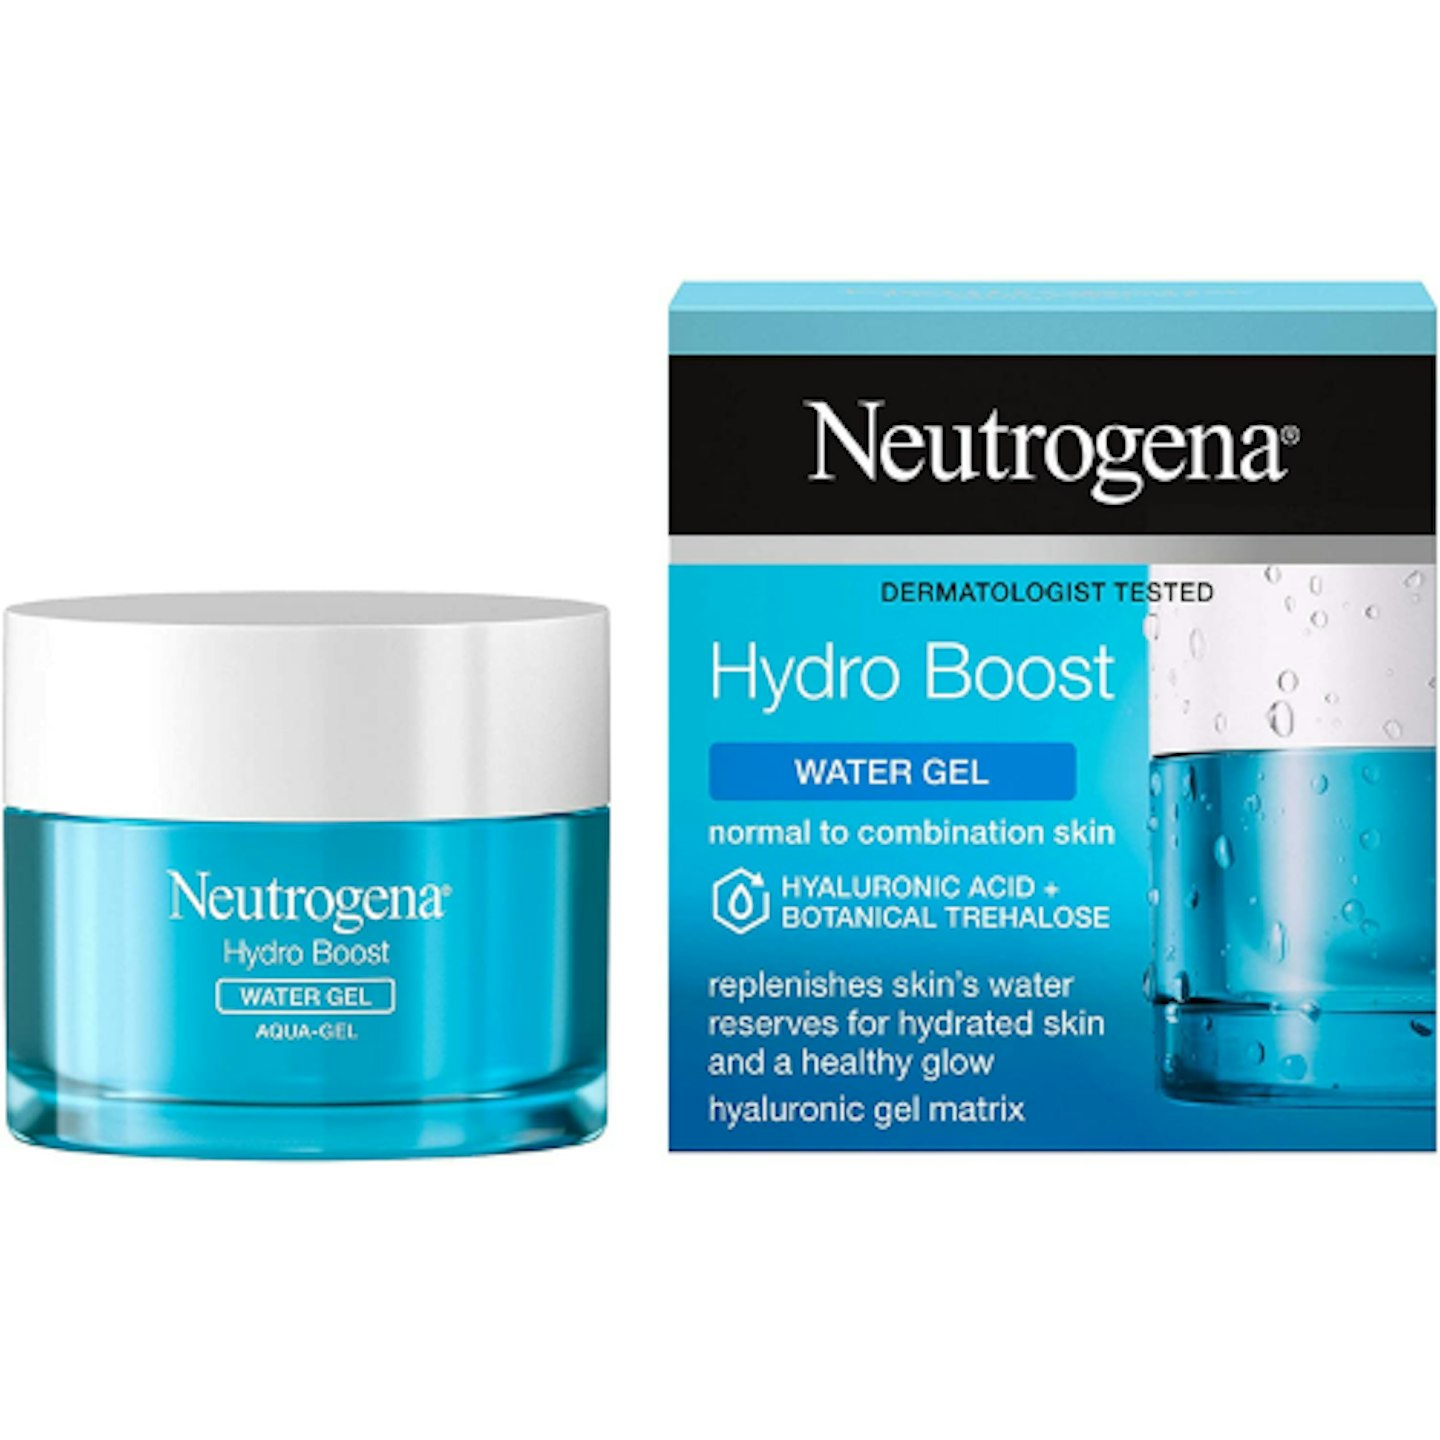 Neutrogena Hydro Boost Water Gel Moisturiser